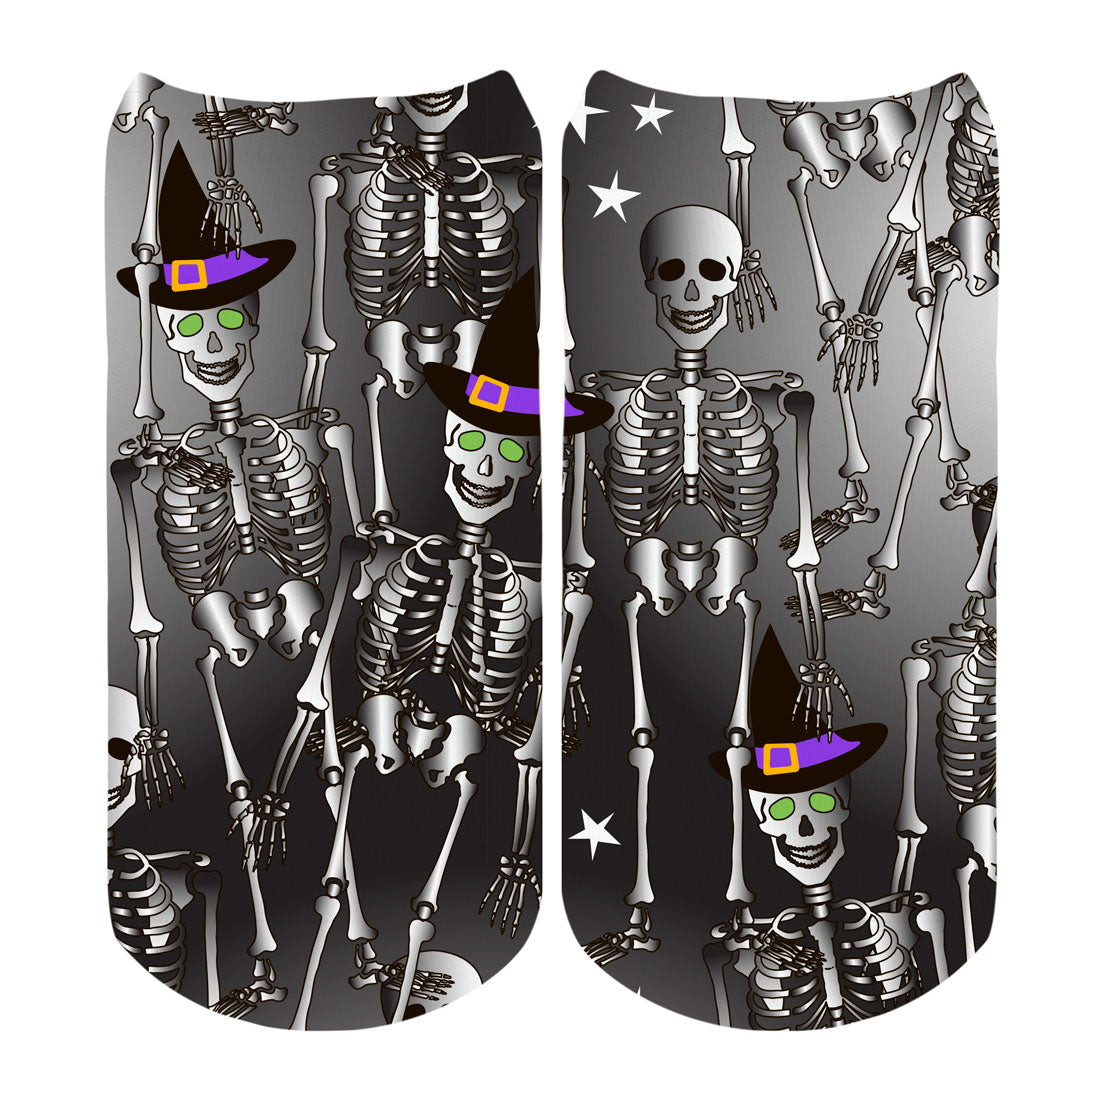 Boys Skeletons No Show Socks by Sublime Designs